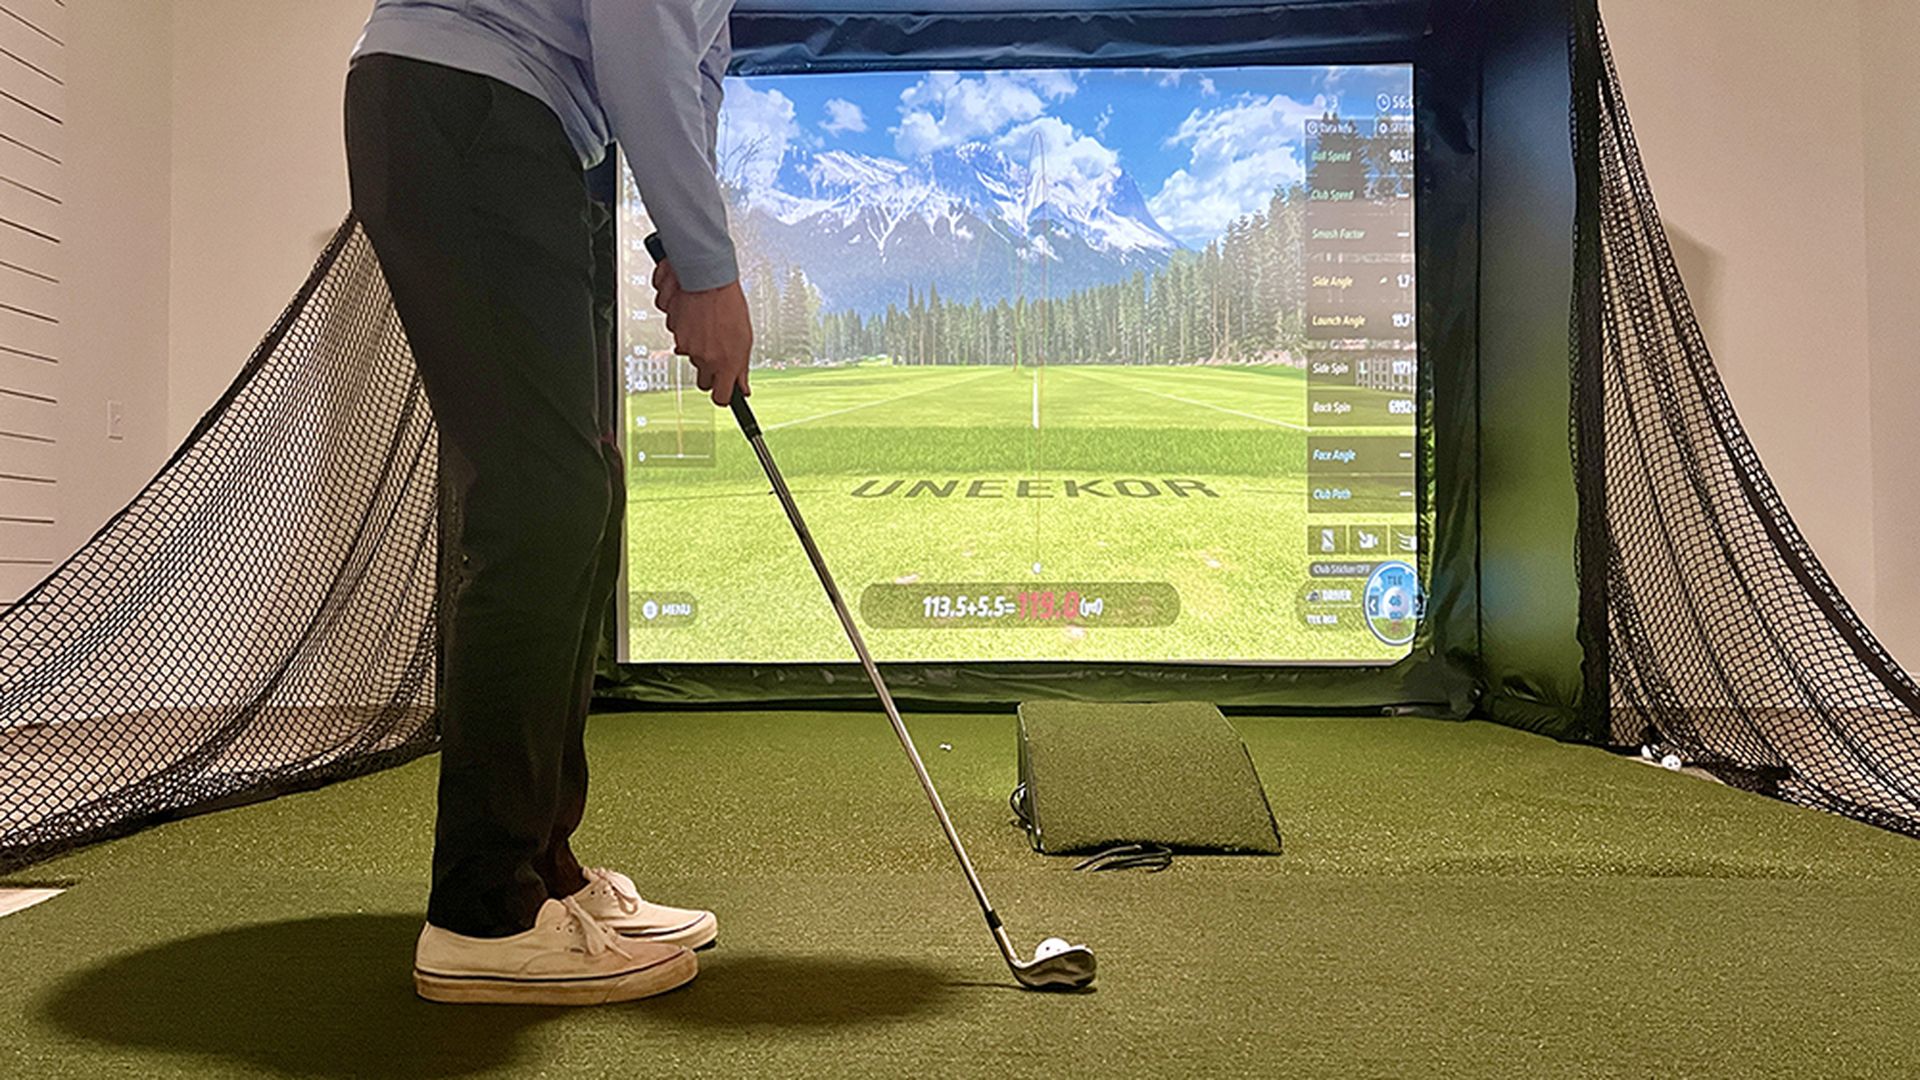 A person prepares to hit a golf ball using a golf simulator.